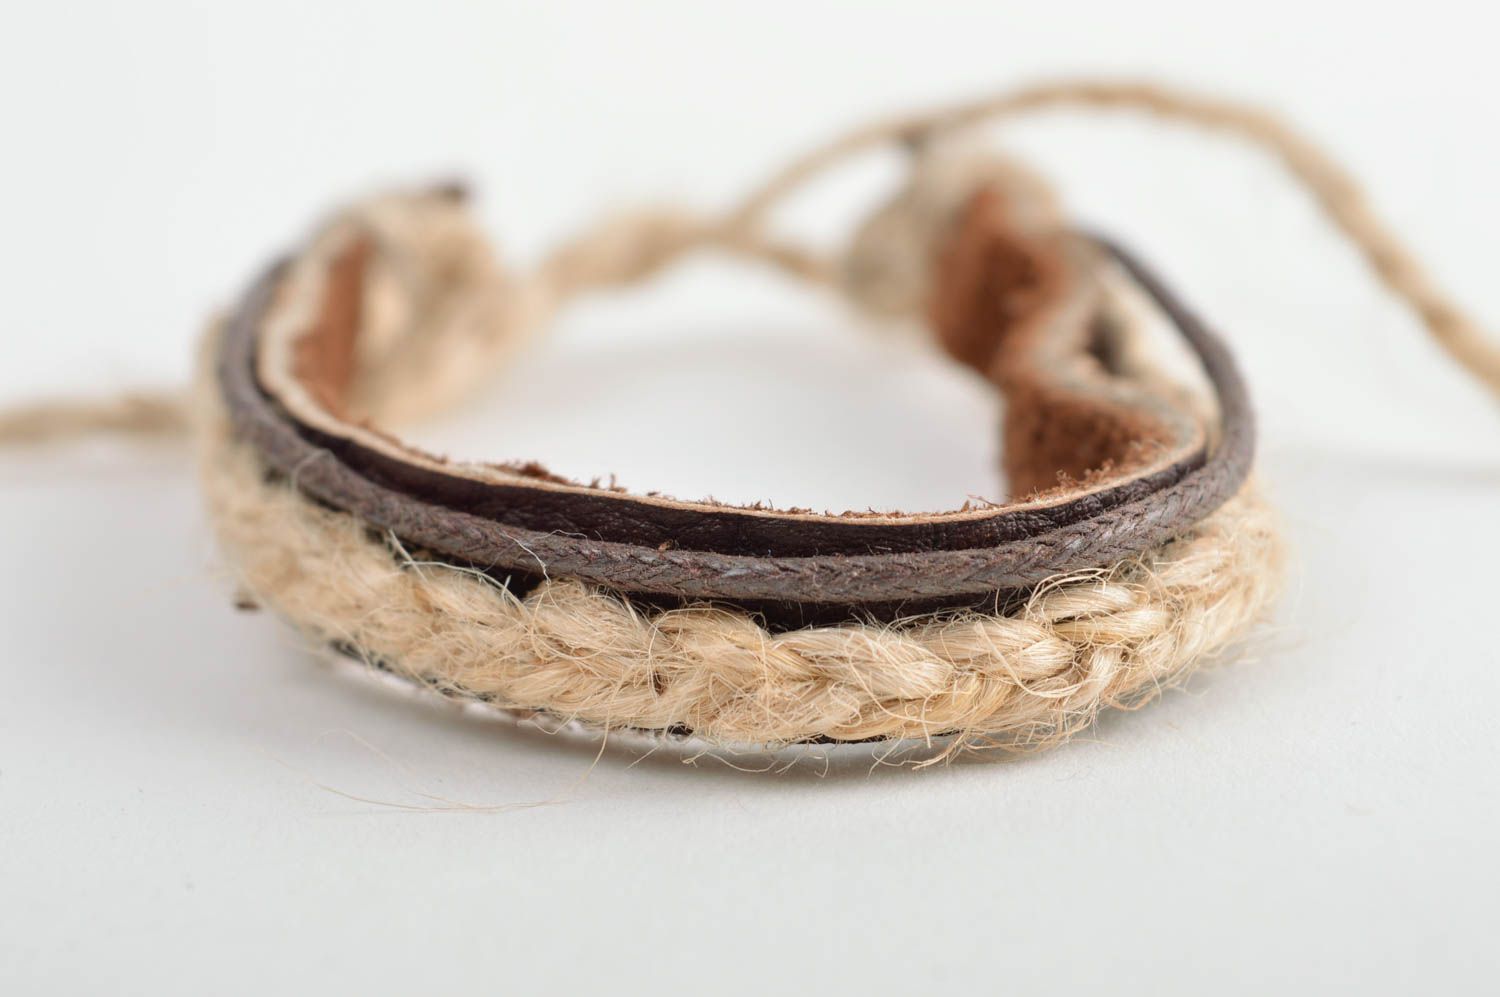 Handmade leather bracelet fashion trends artisan jewelry designs gift ideas photo 3